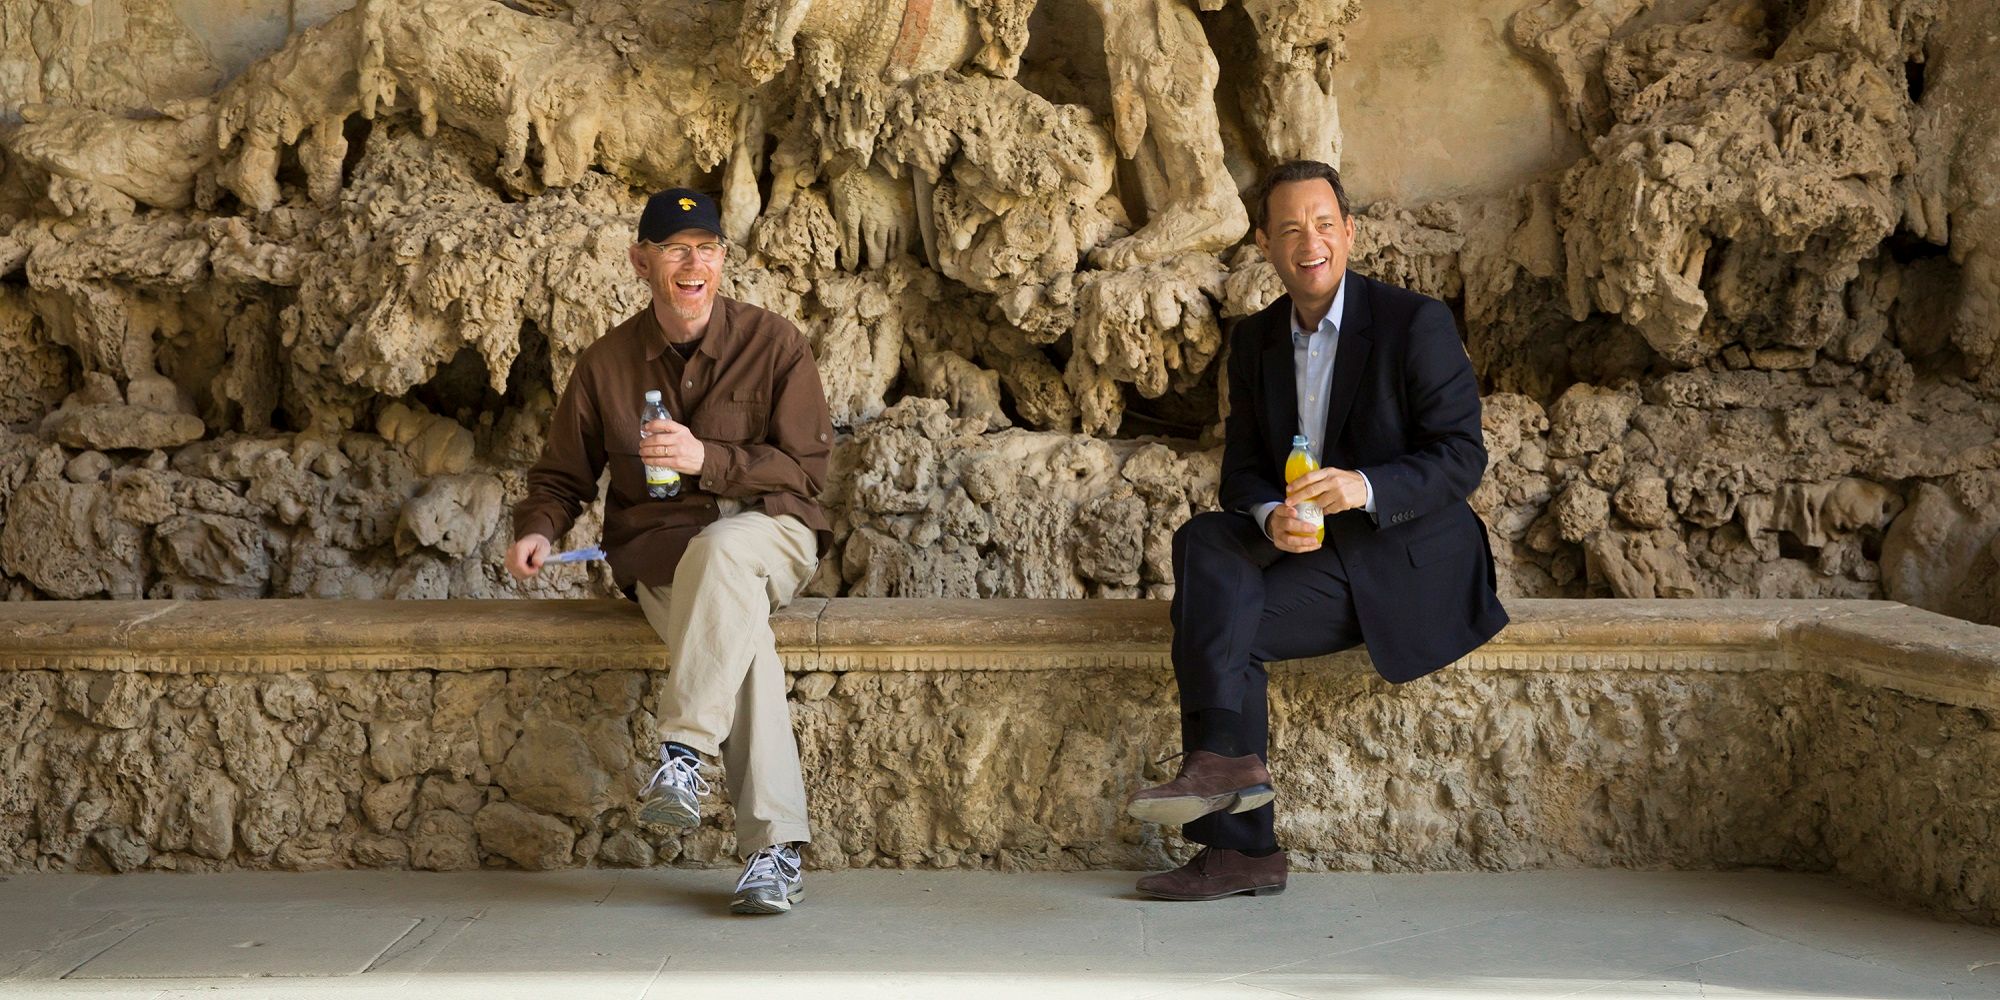 Tom Hanks and Ron Howard